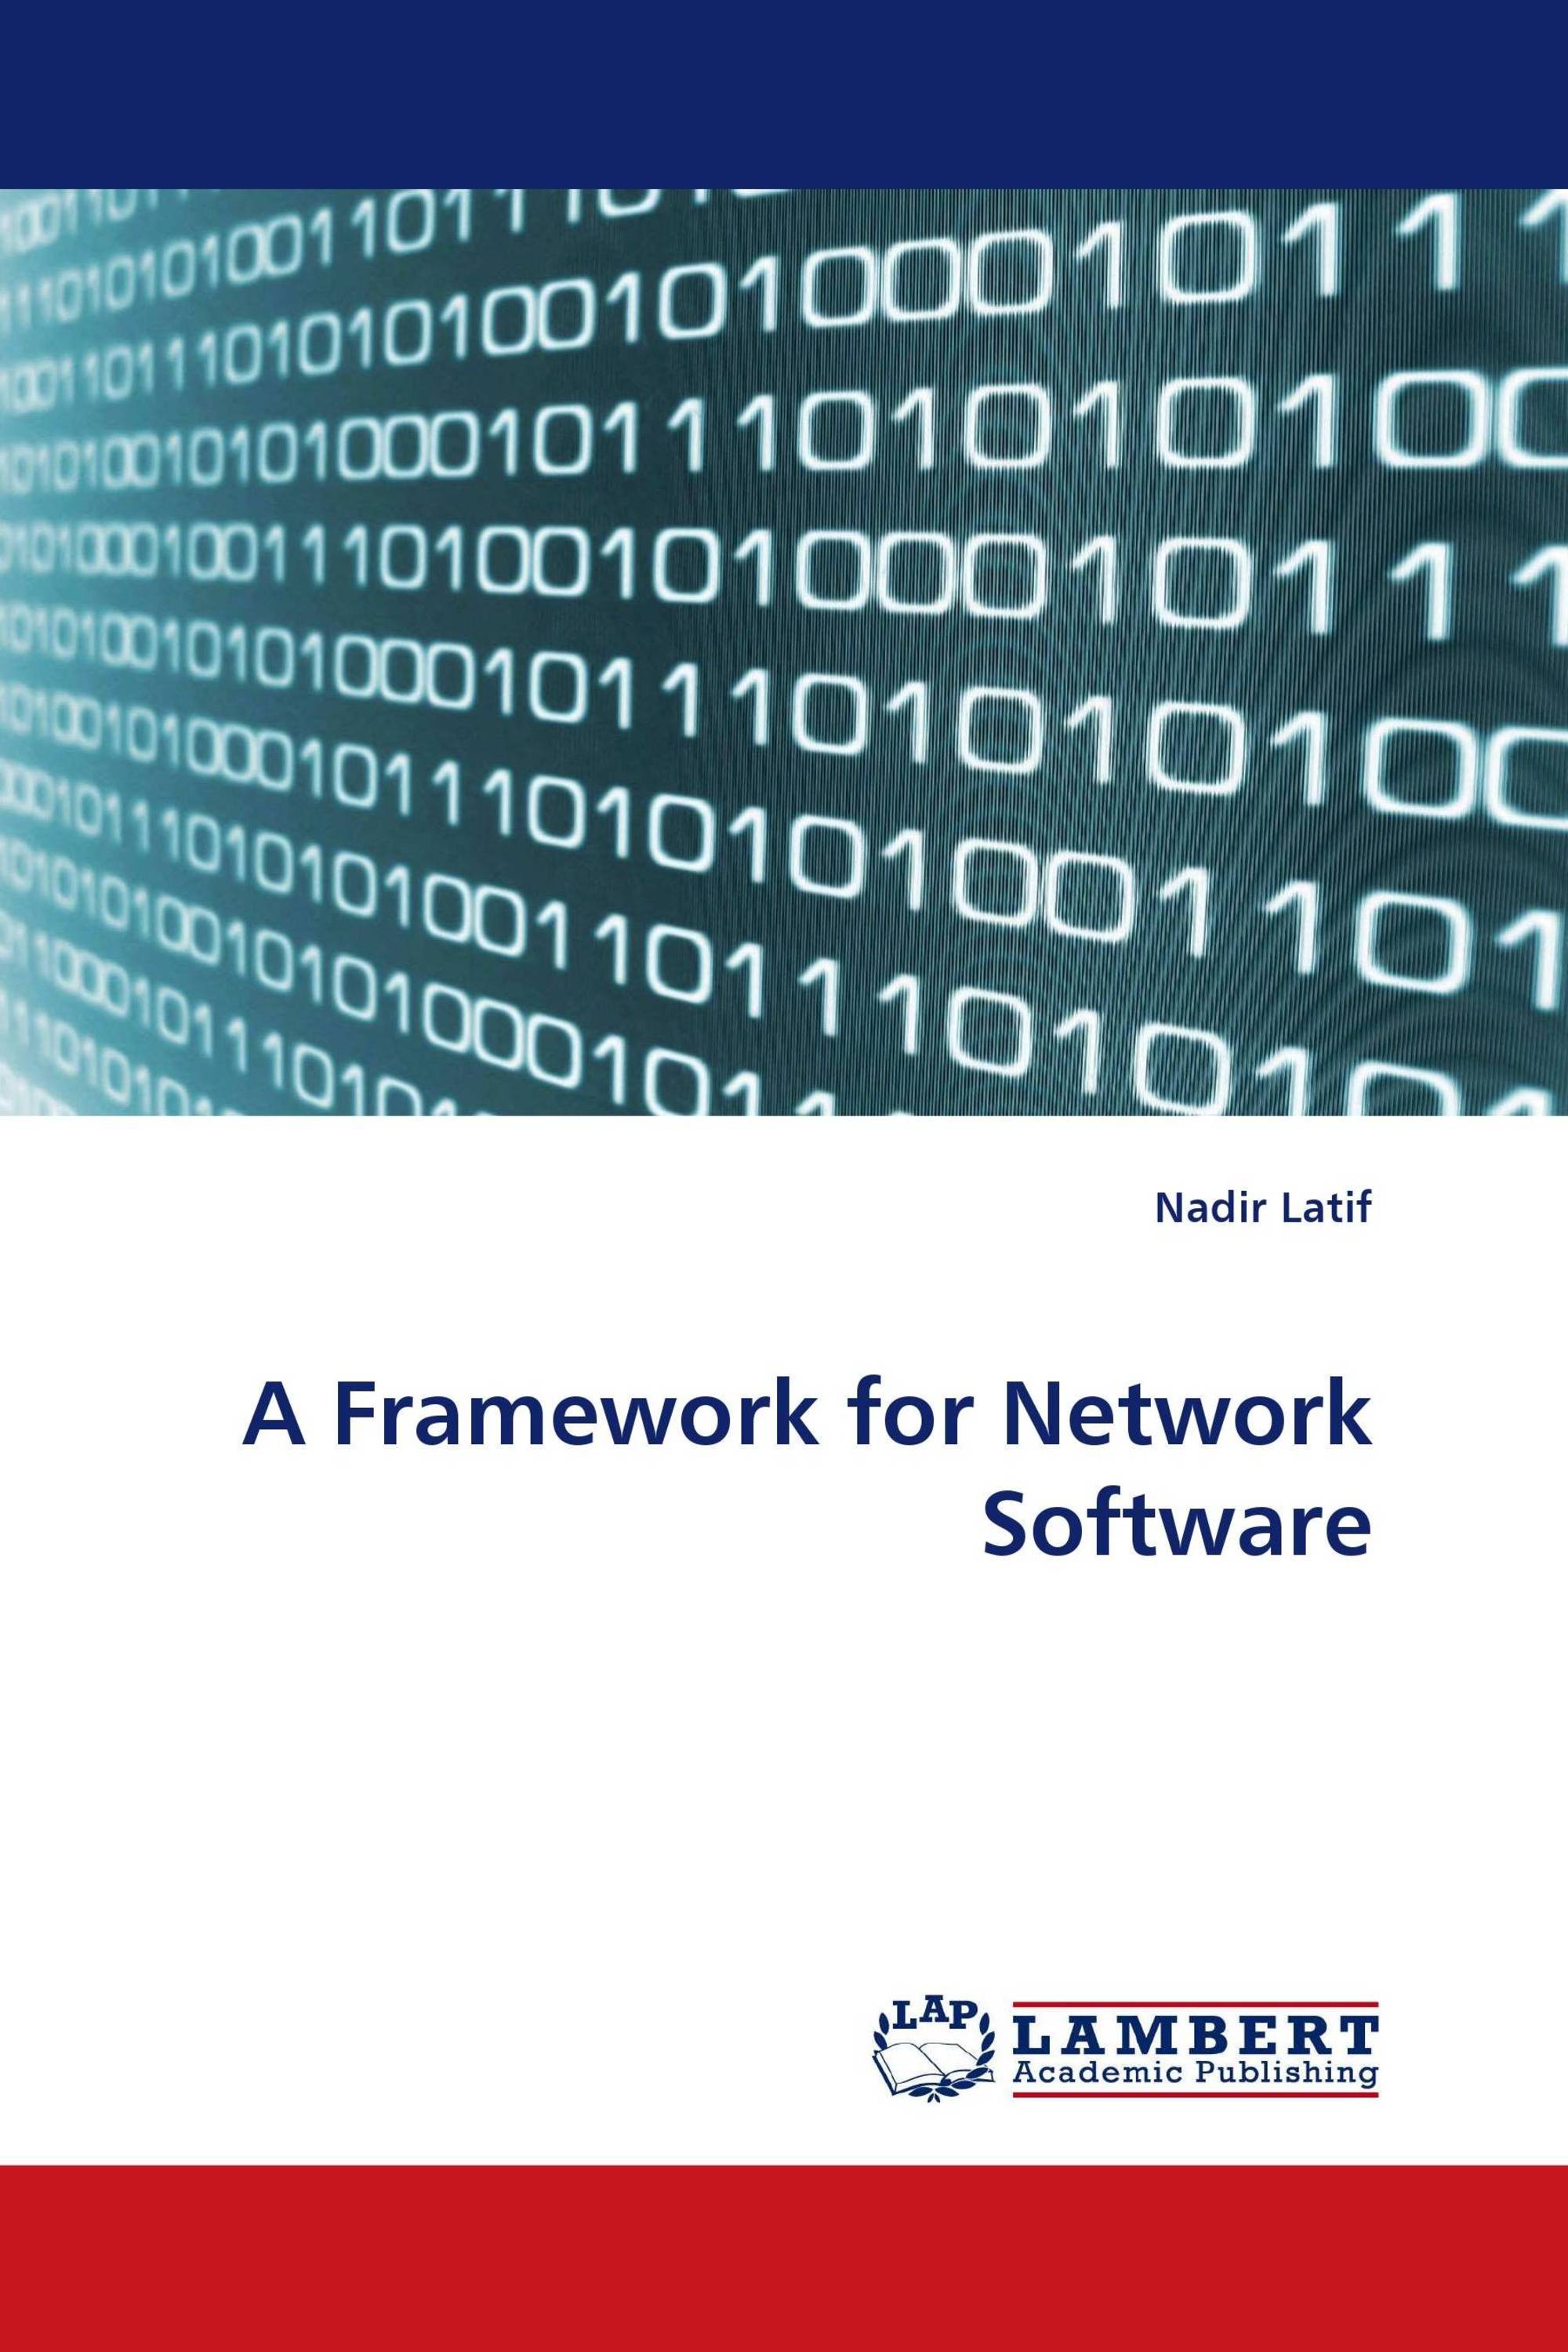 A Framework for Network Software